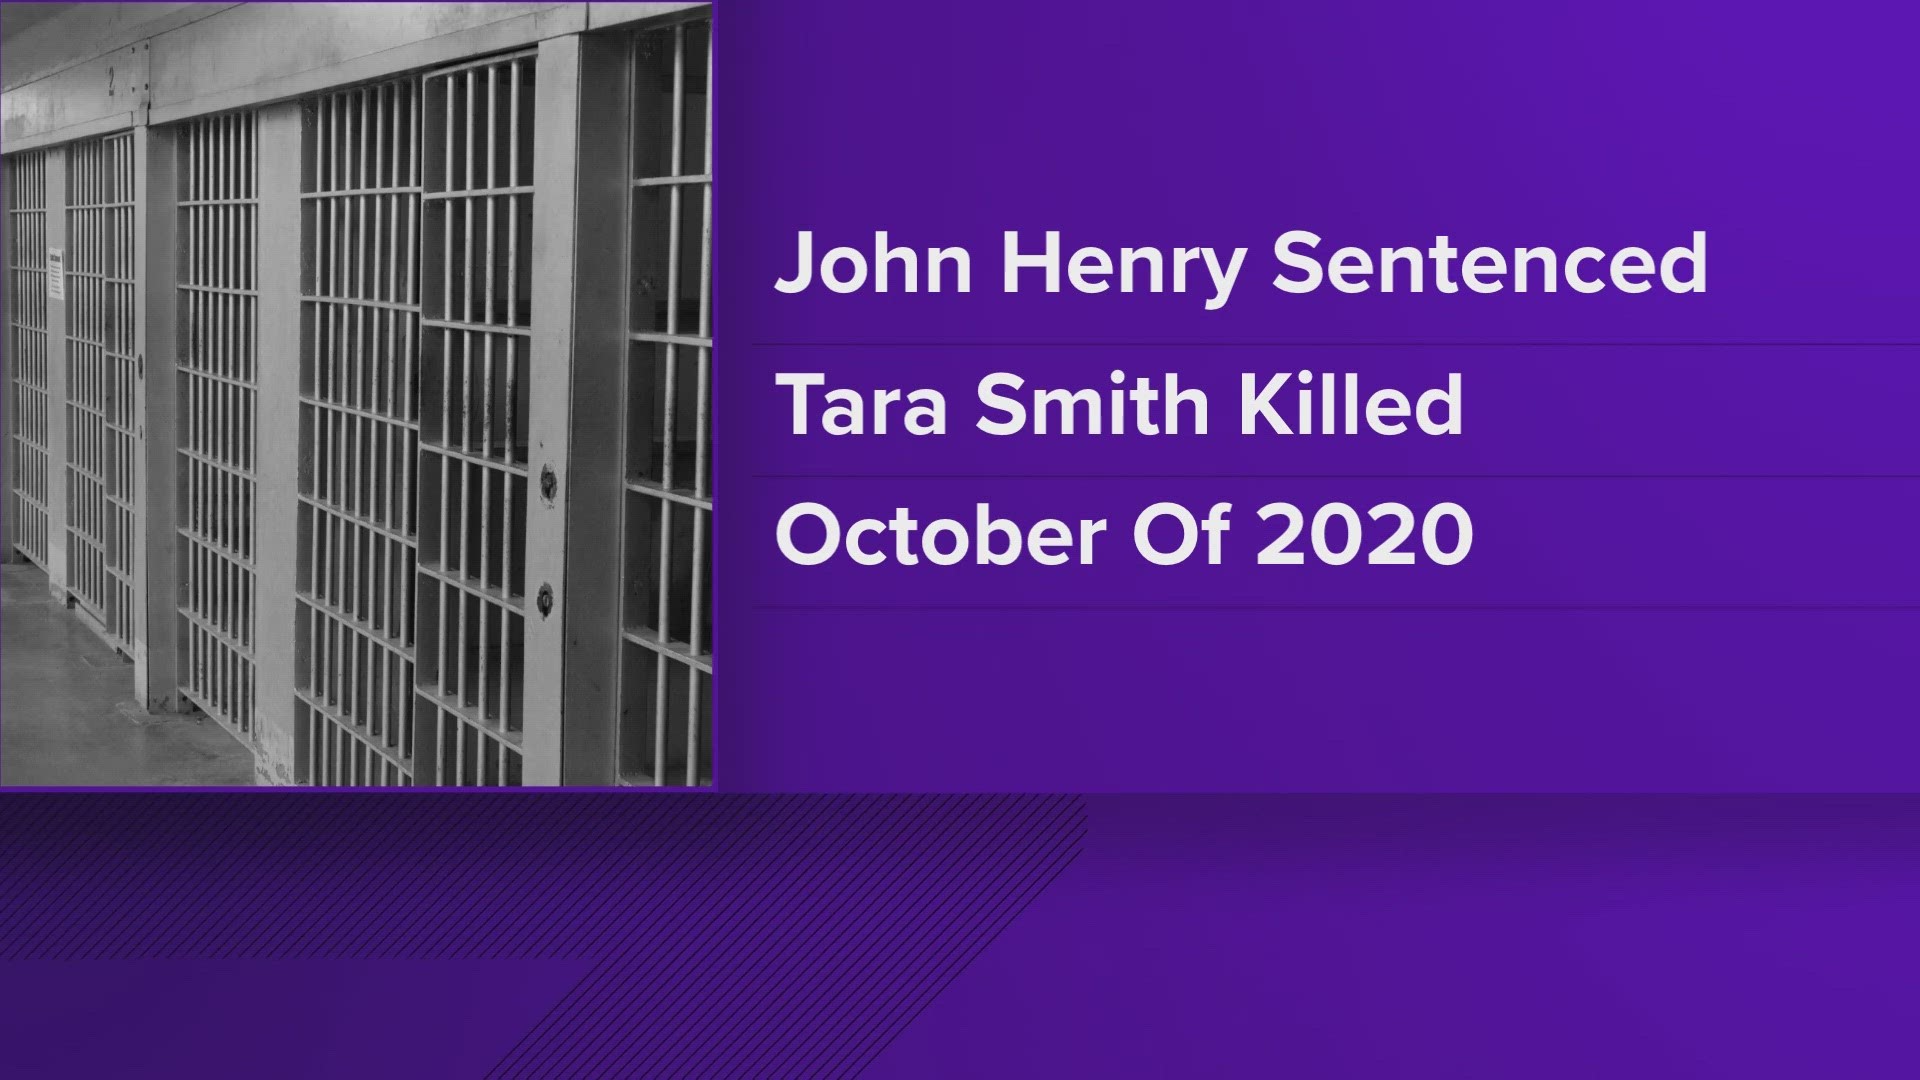 A Marion County judge sentenced John Henry Feb. 23 for Tara Smith's murder.